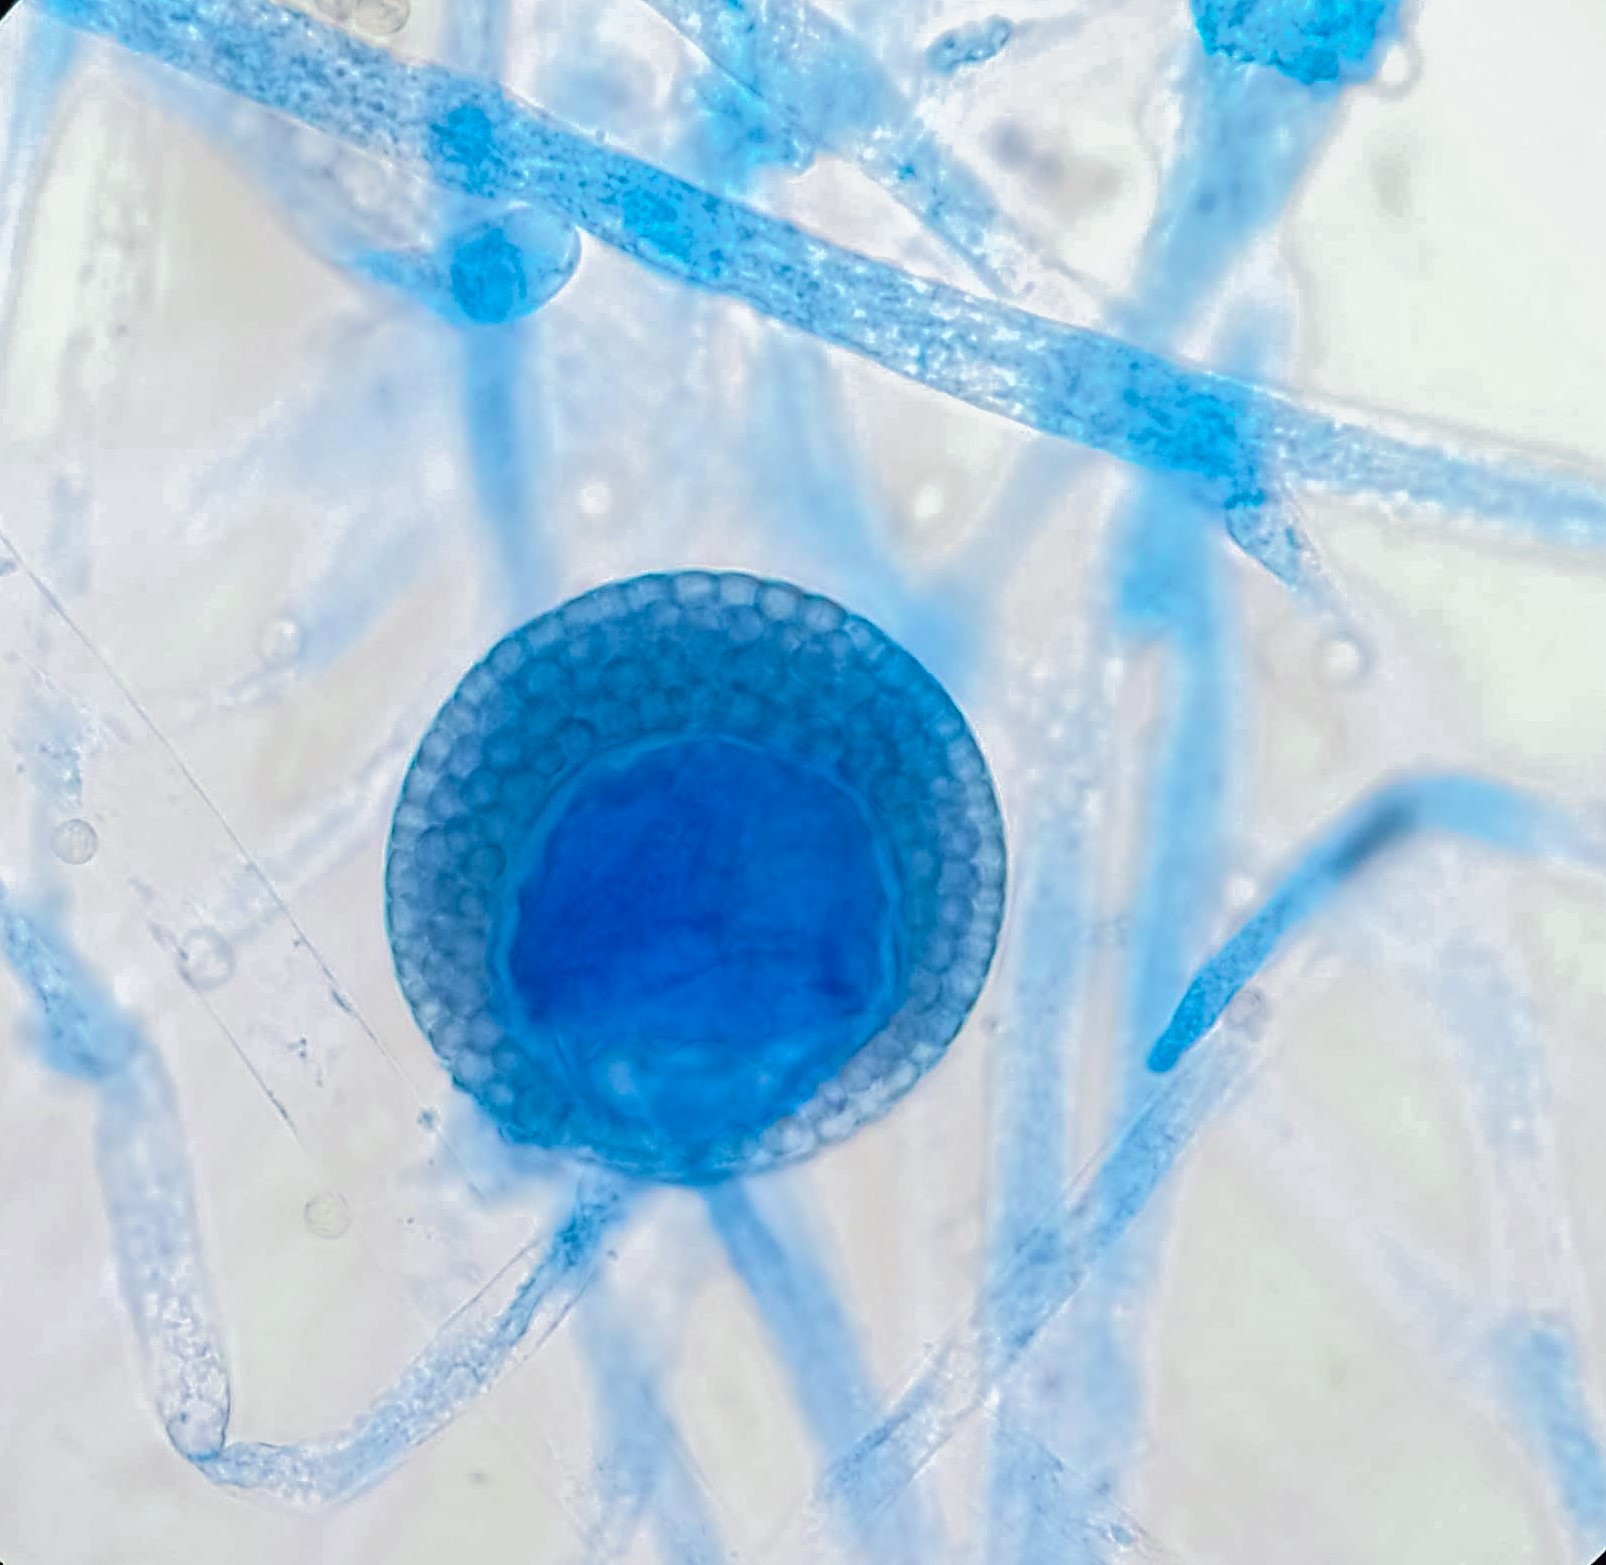 Photomicrograph of a mature Rhizopus microsporus sporangium, strain ATCC 11559, stained with lactophenol cotton blue (100x magnification). Courtesy of Antonio Tapia-Moragón and Dr. Pedro L. Valero-Guillén (University of Murcia)